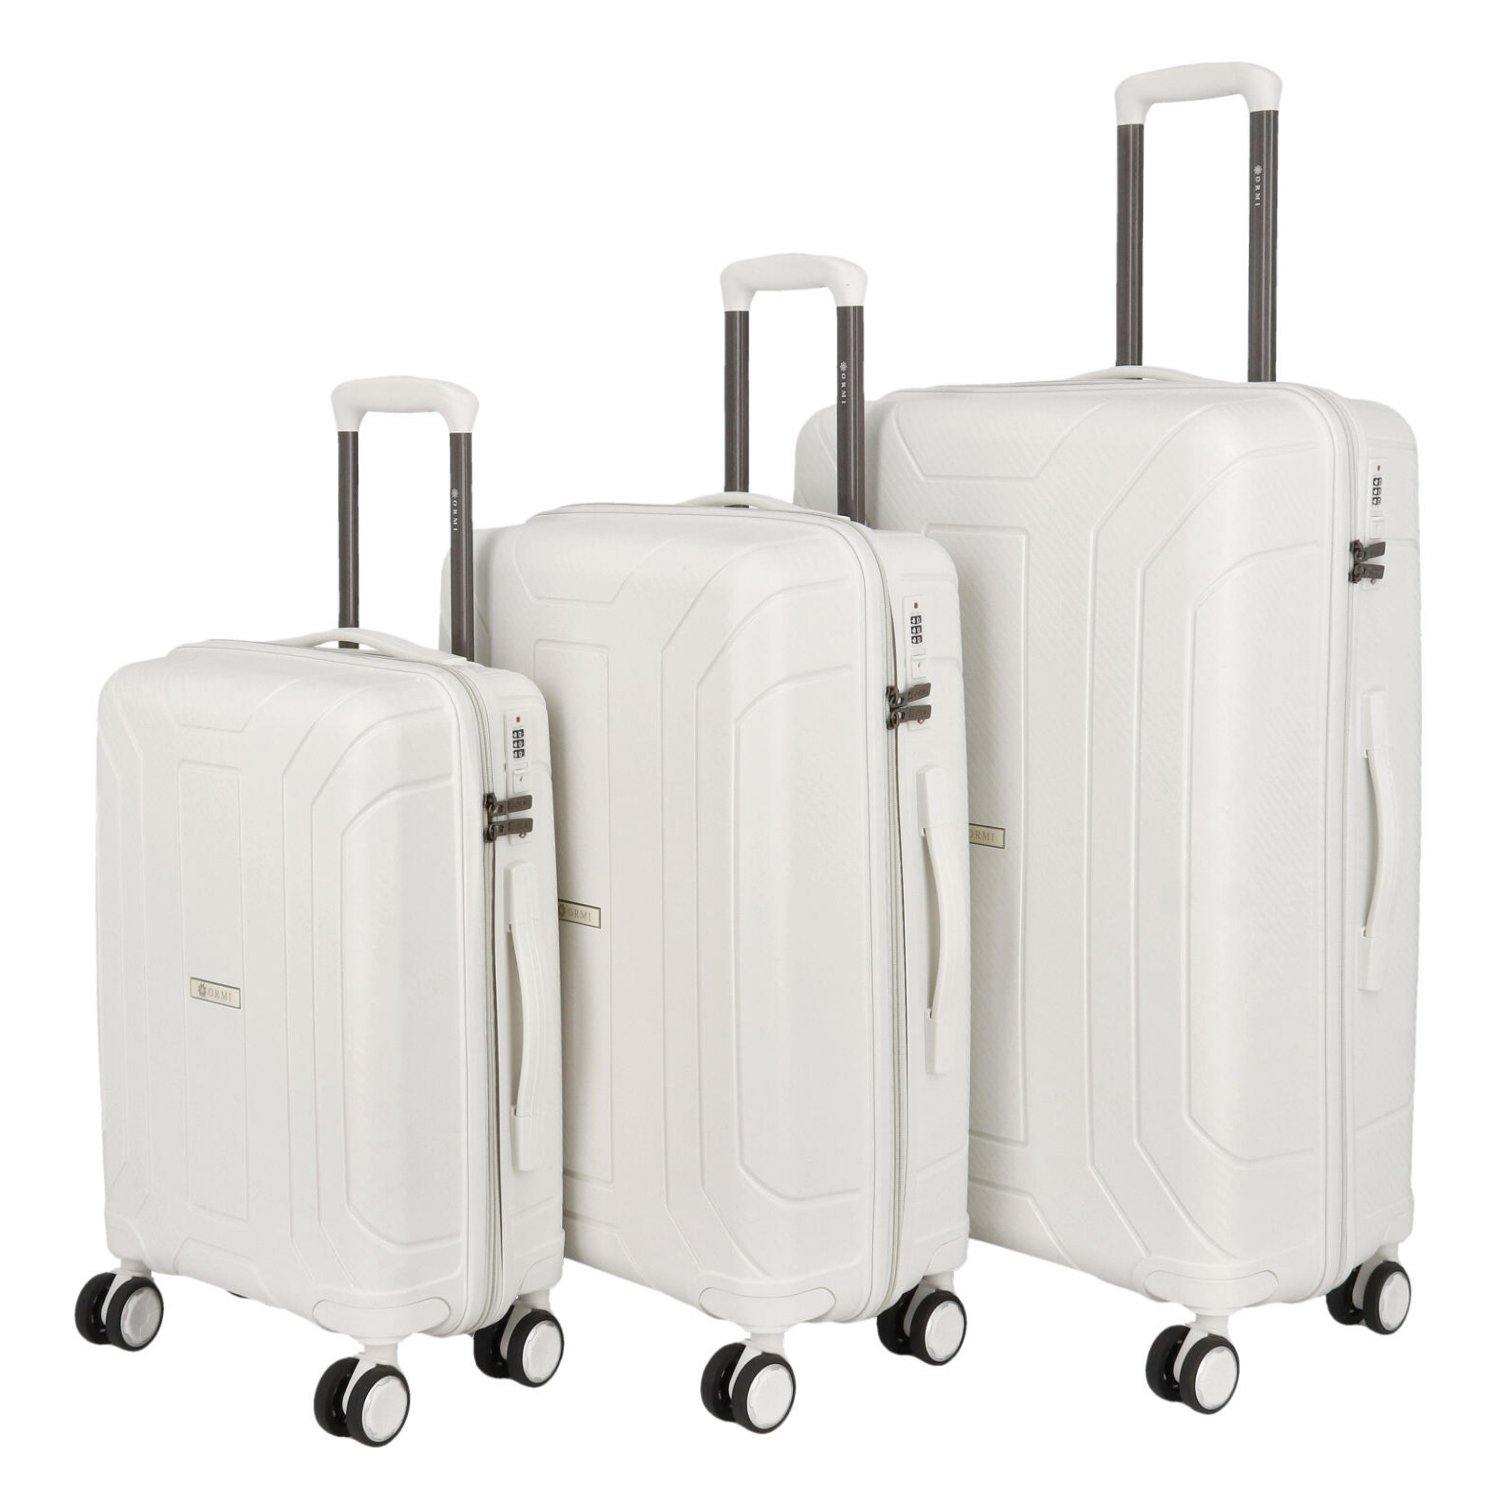 Cestovní plastový kufr Ormi Tiberius SADA, bílý